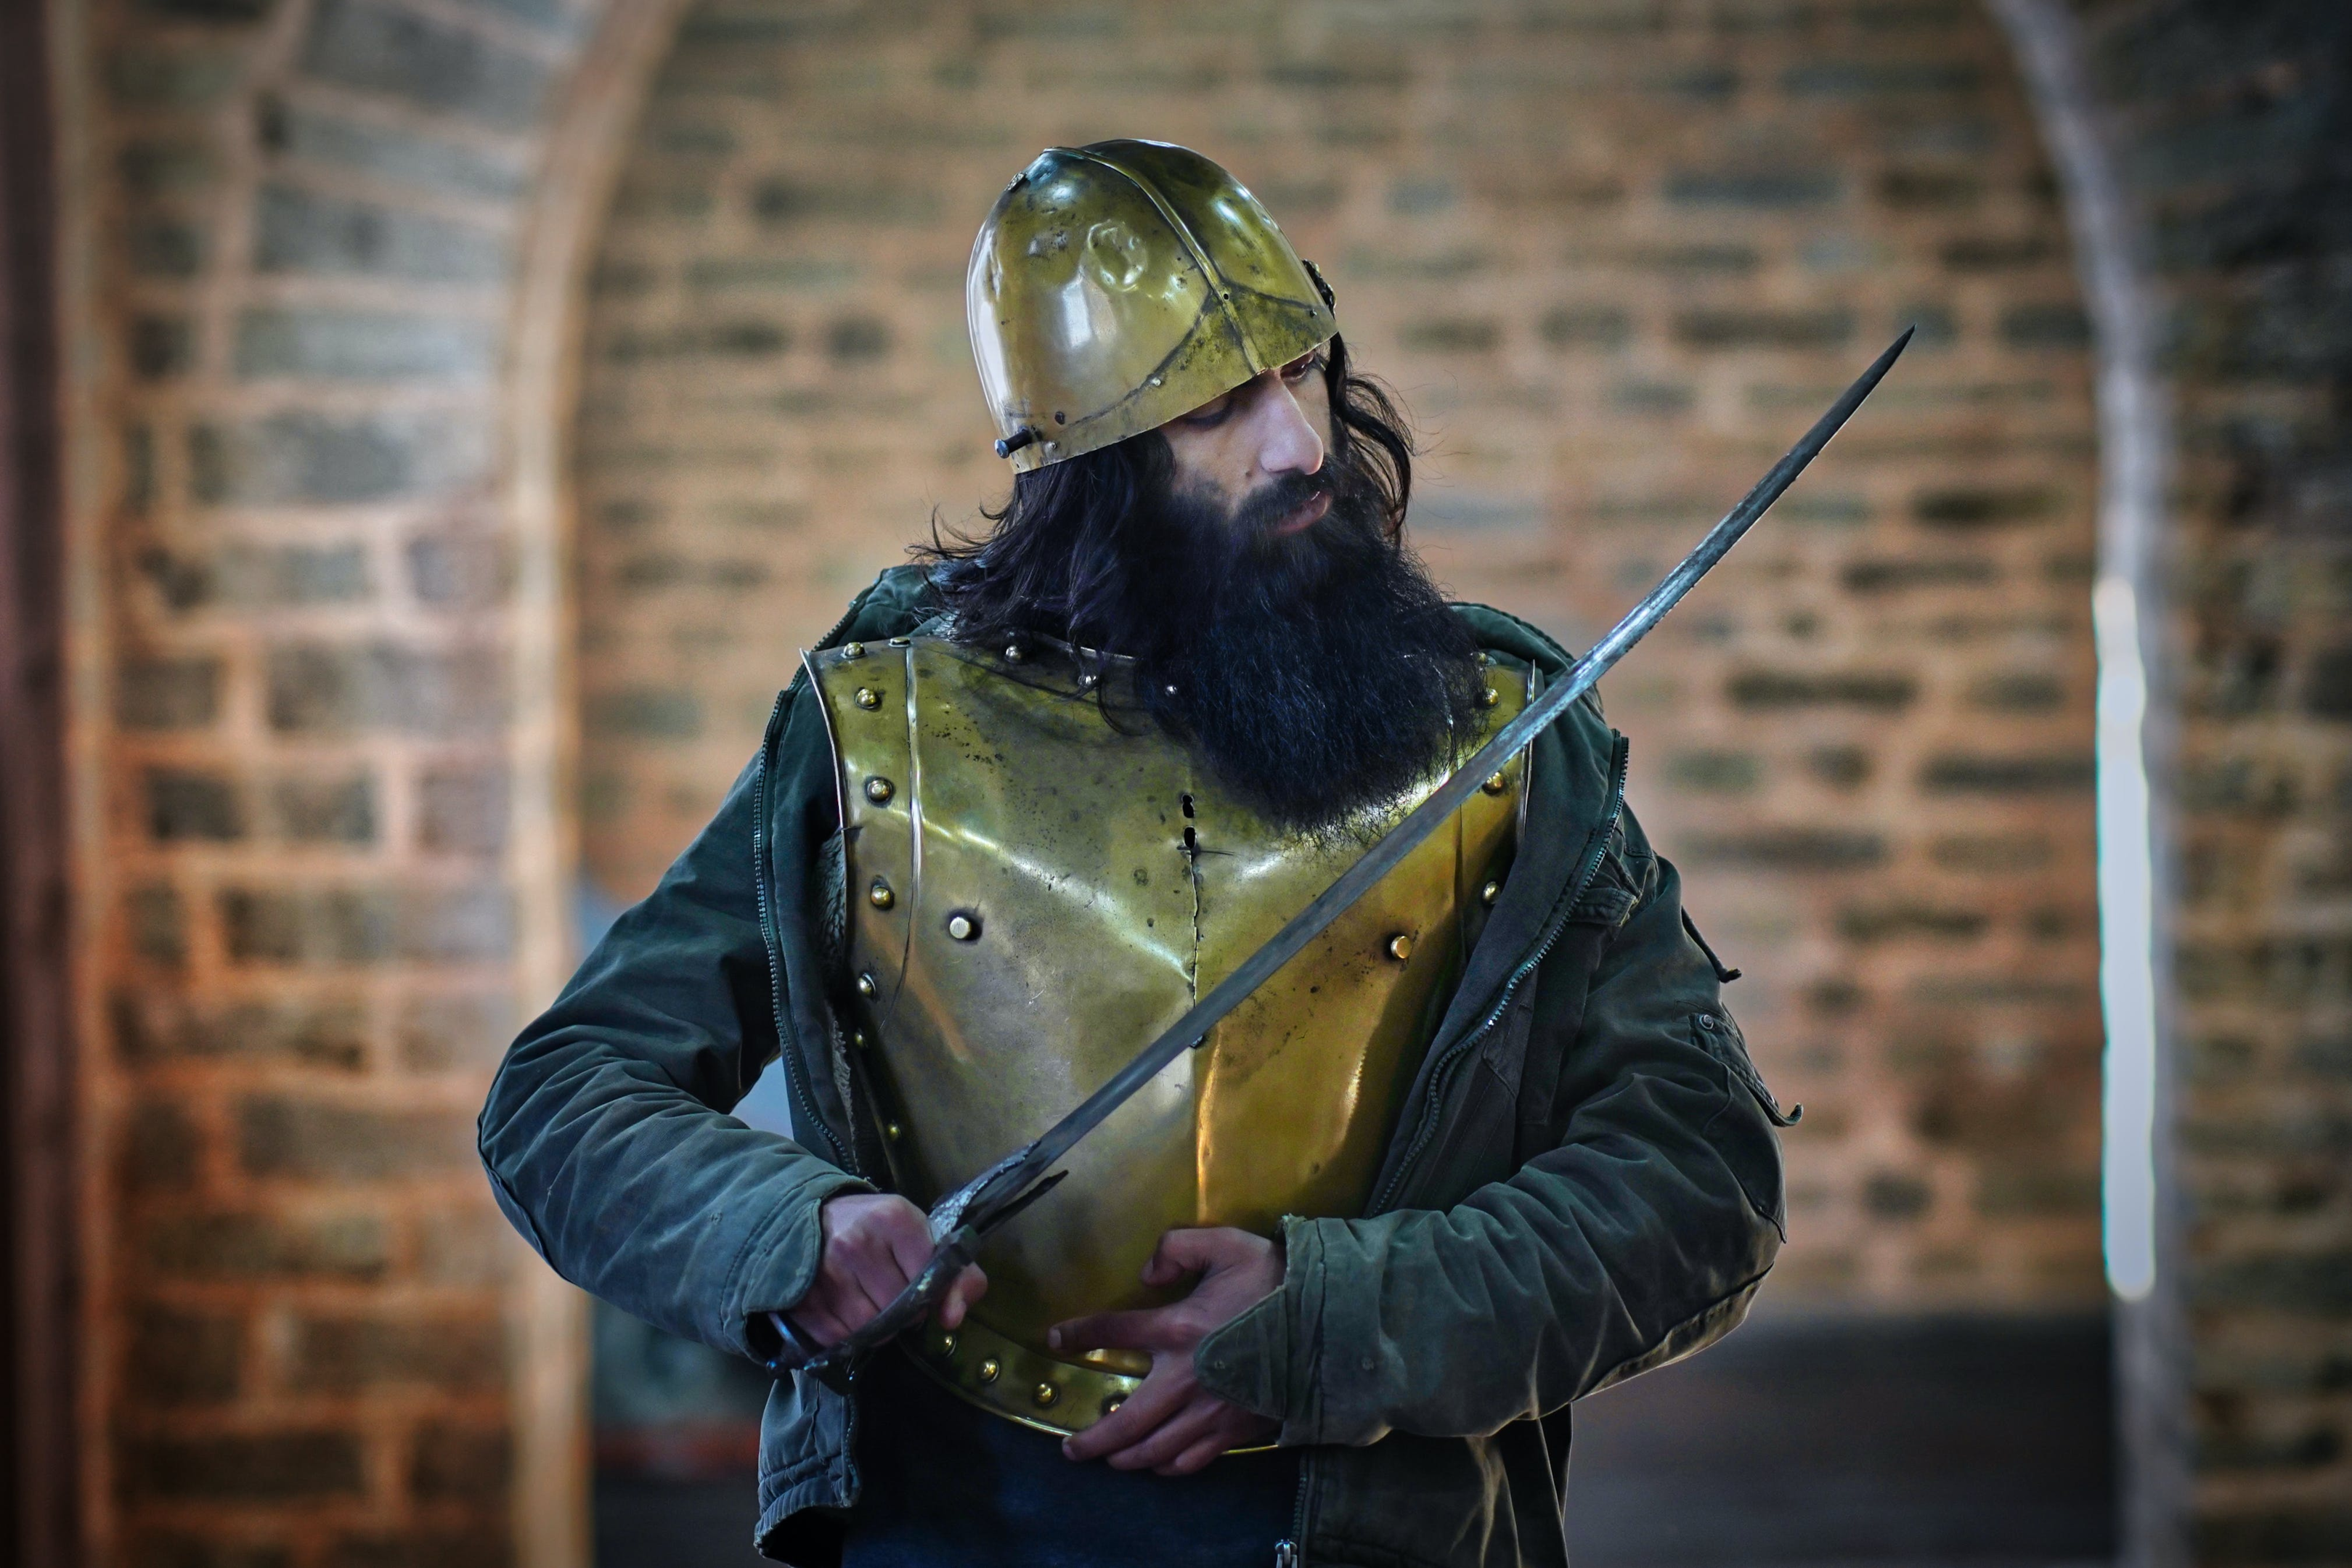 man wearing steel armor, holding a sword